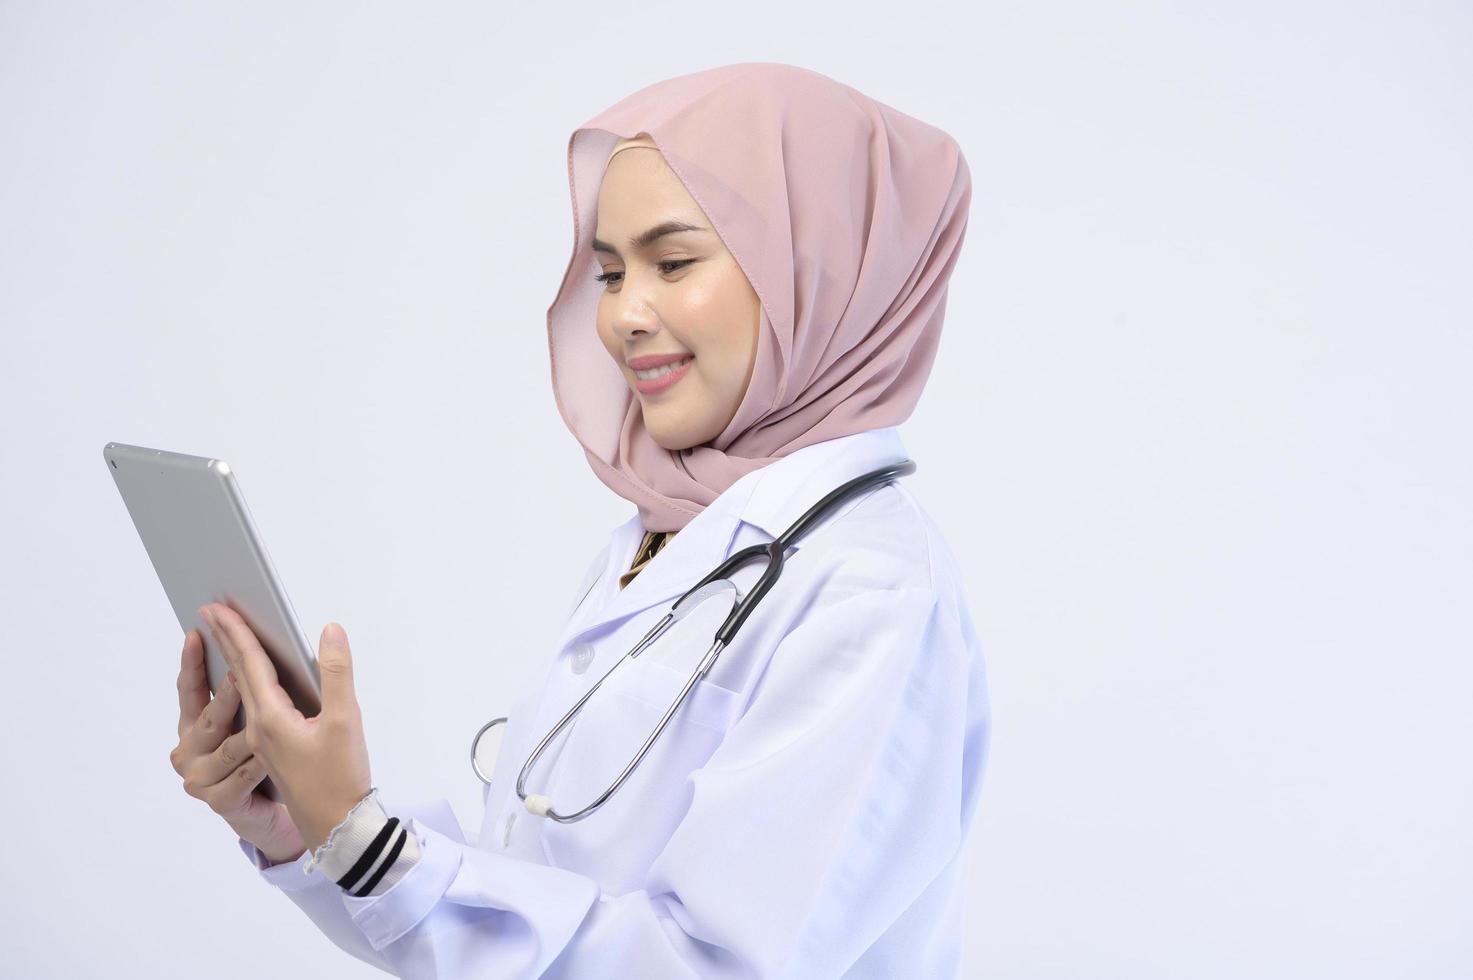 femme médecin musulmane avec hijab sur fond blanc studio. photo